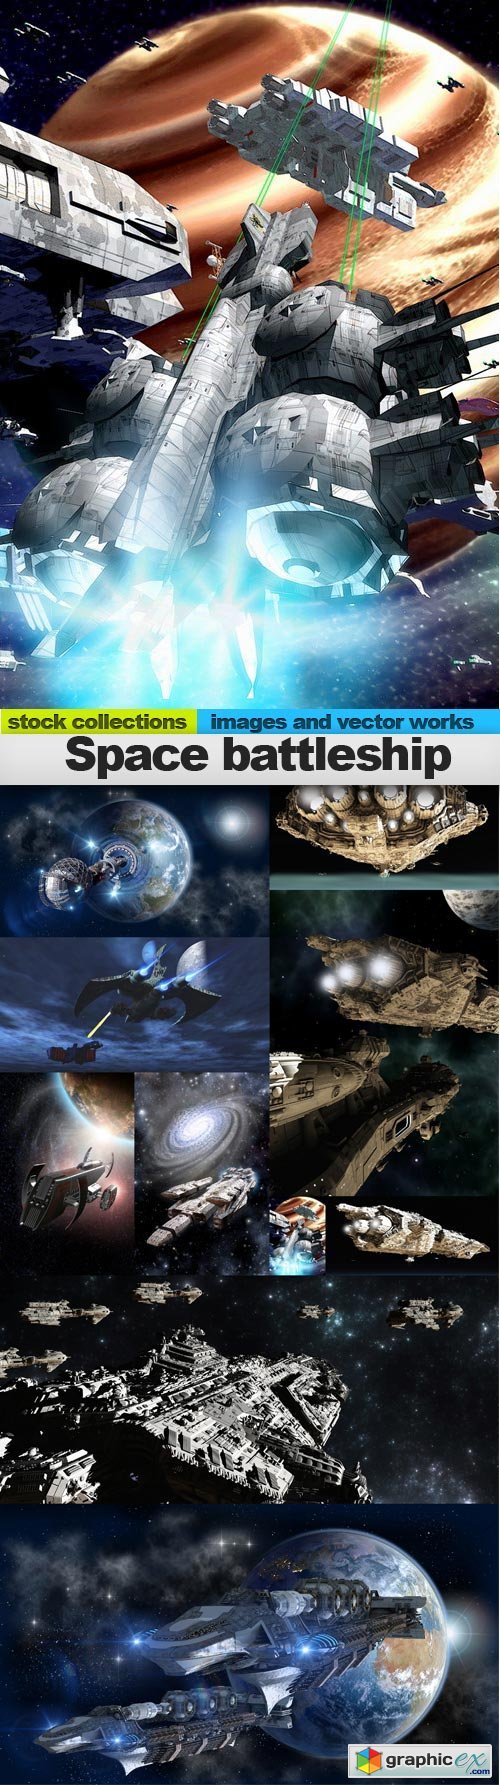 Space battleship, 10 x UHQ JPEG